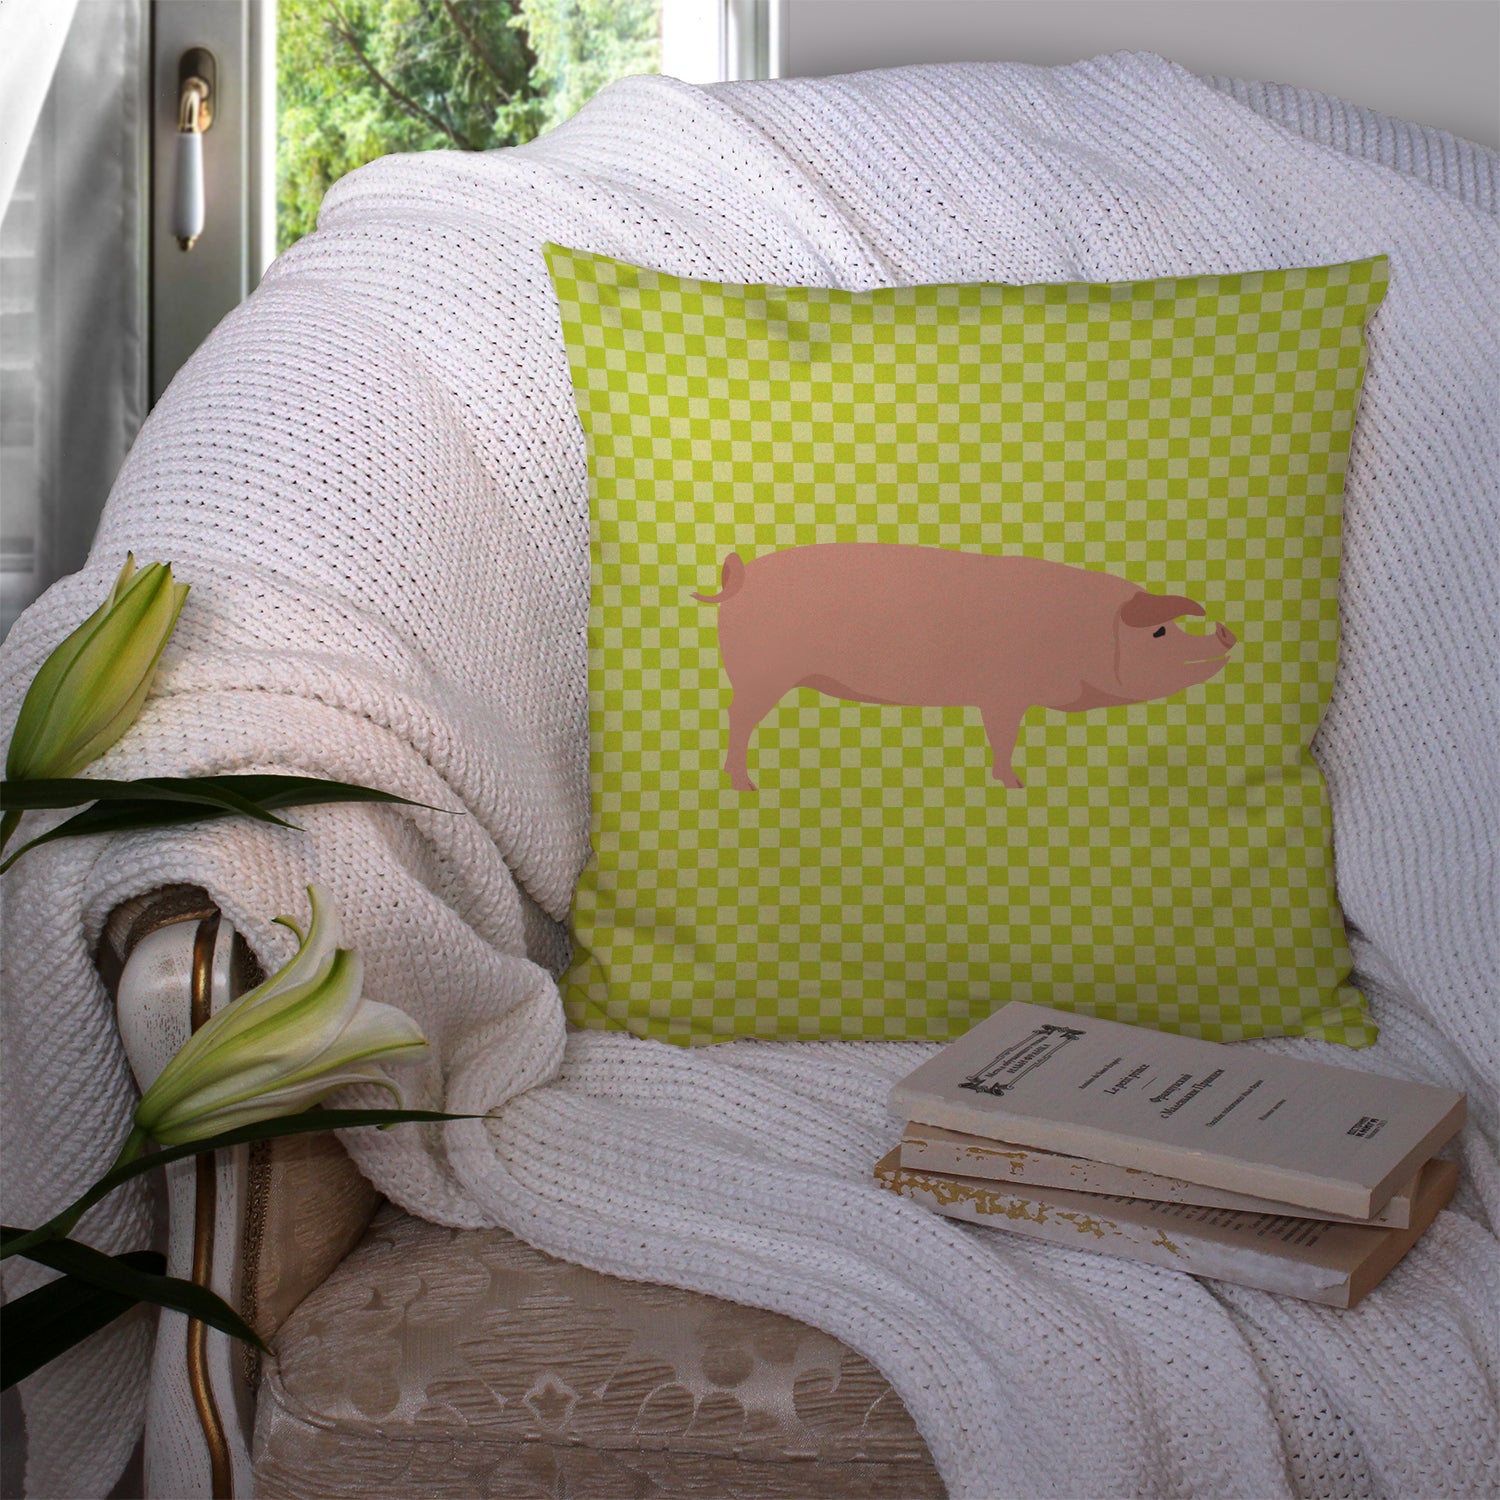 American Landrace Pig Green Fabric Decorative Pillow BB7758PW1414 - the-store.com